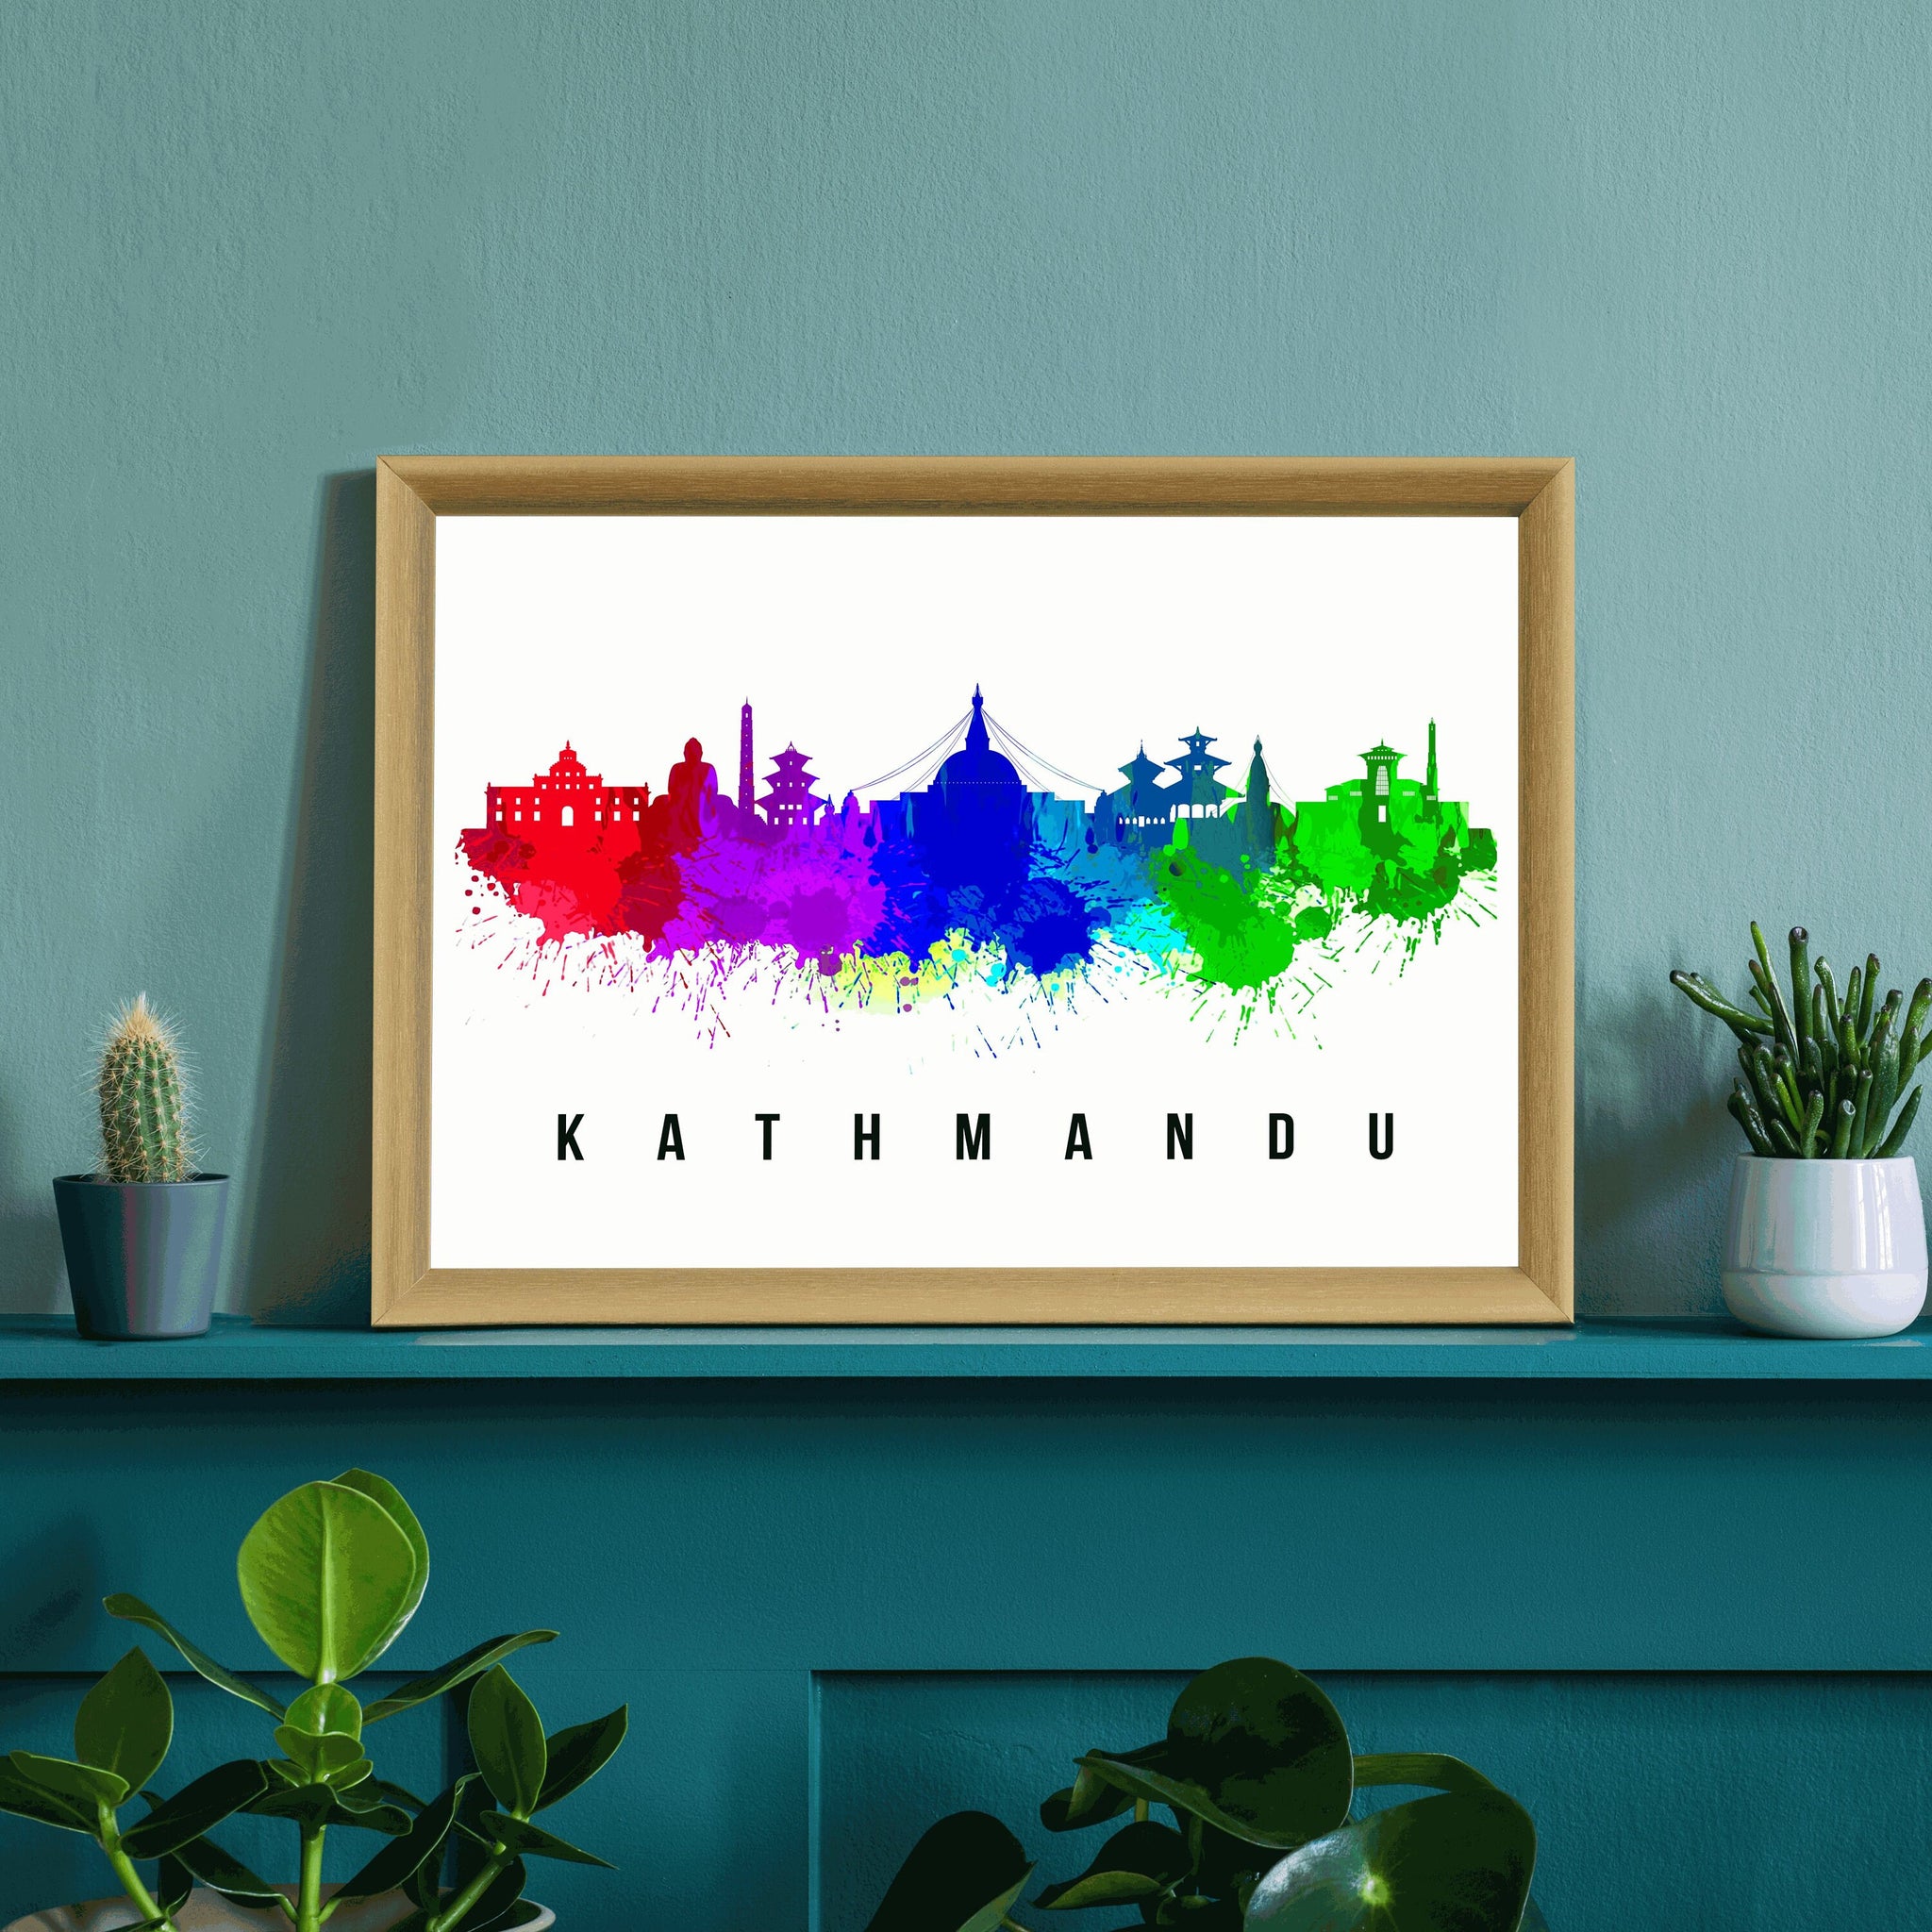 KATHMANDU - NEPAL Poster,  Skyline Poster Cityscape and Landmark Print, Kathmandu Illustration Home Wall Art, Office Decor